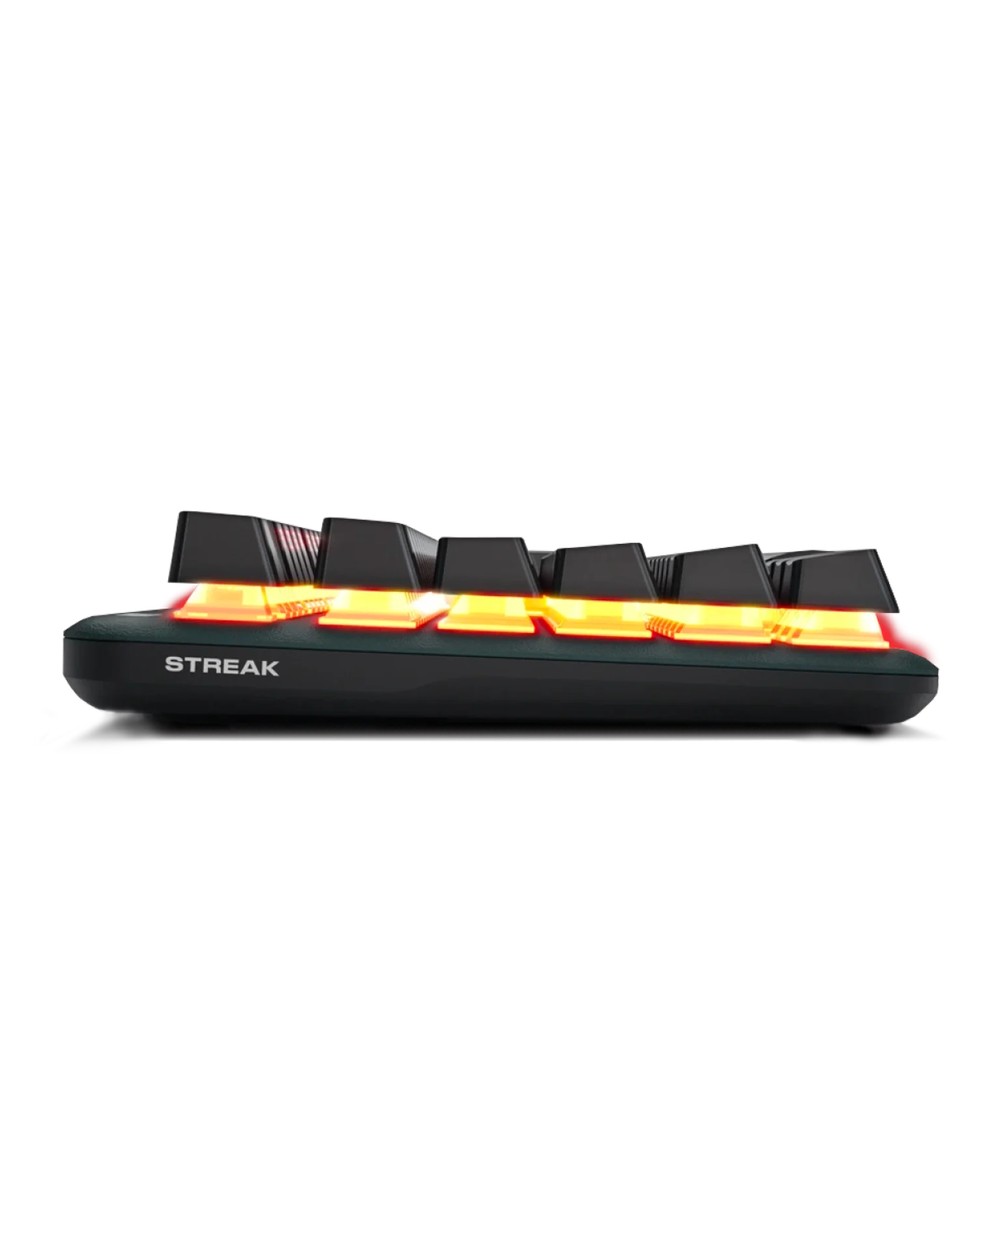 Keyboard / Fnatic / Fnatic miniSTREAK, TKL Gaming Keyboard, RGB LED -  ISO-DE, Kailh Speed Silver